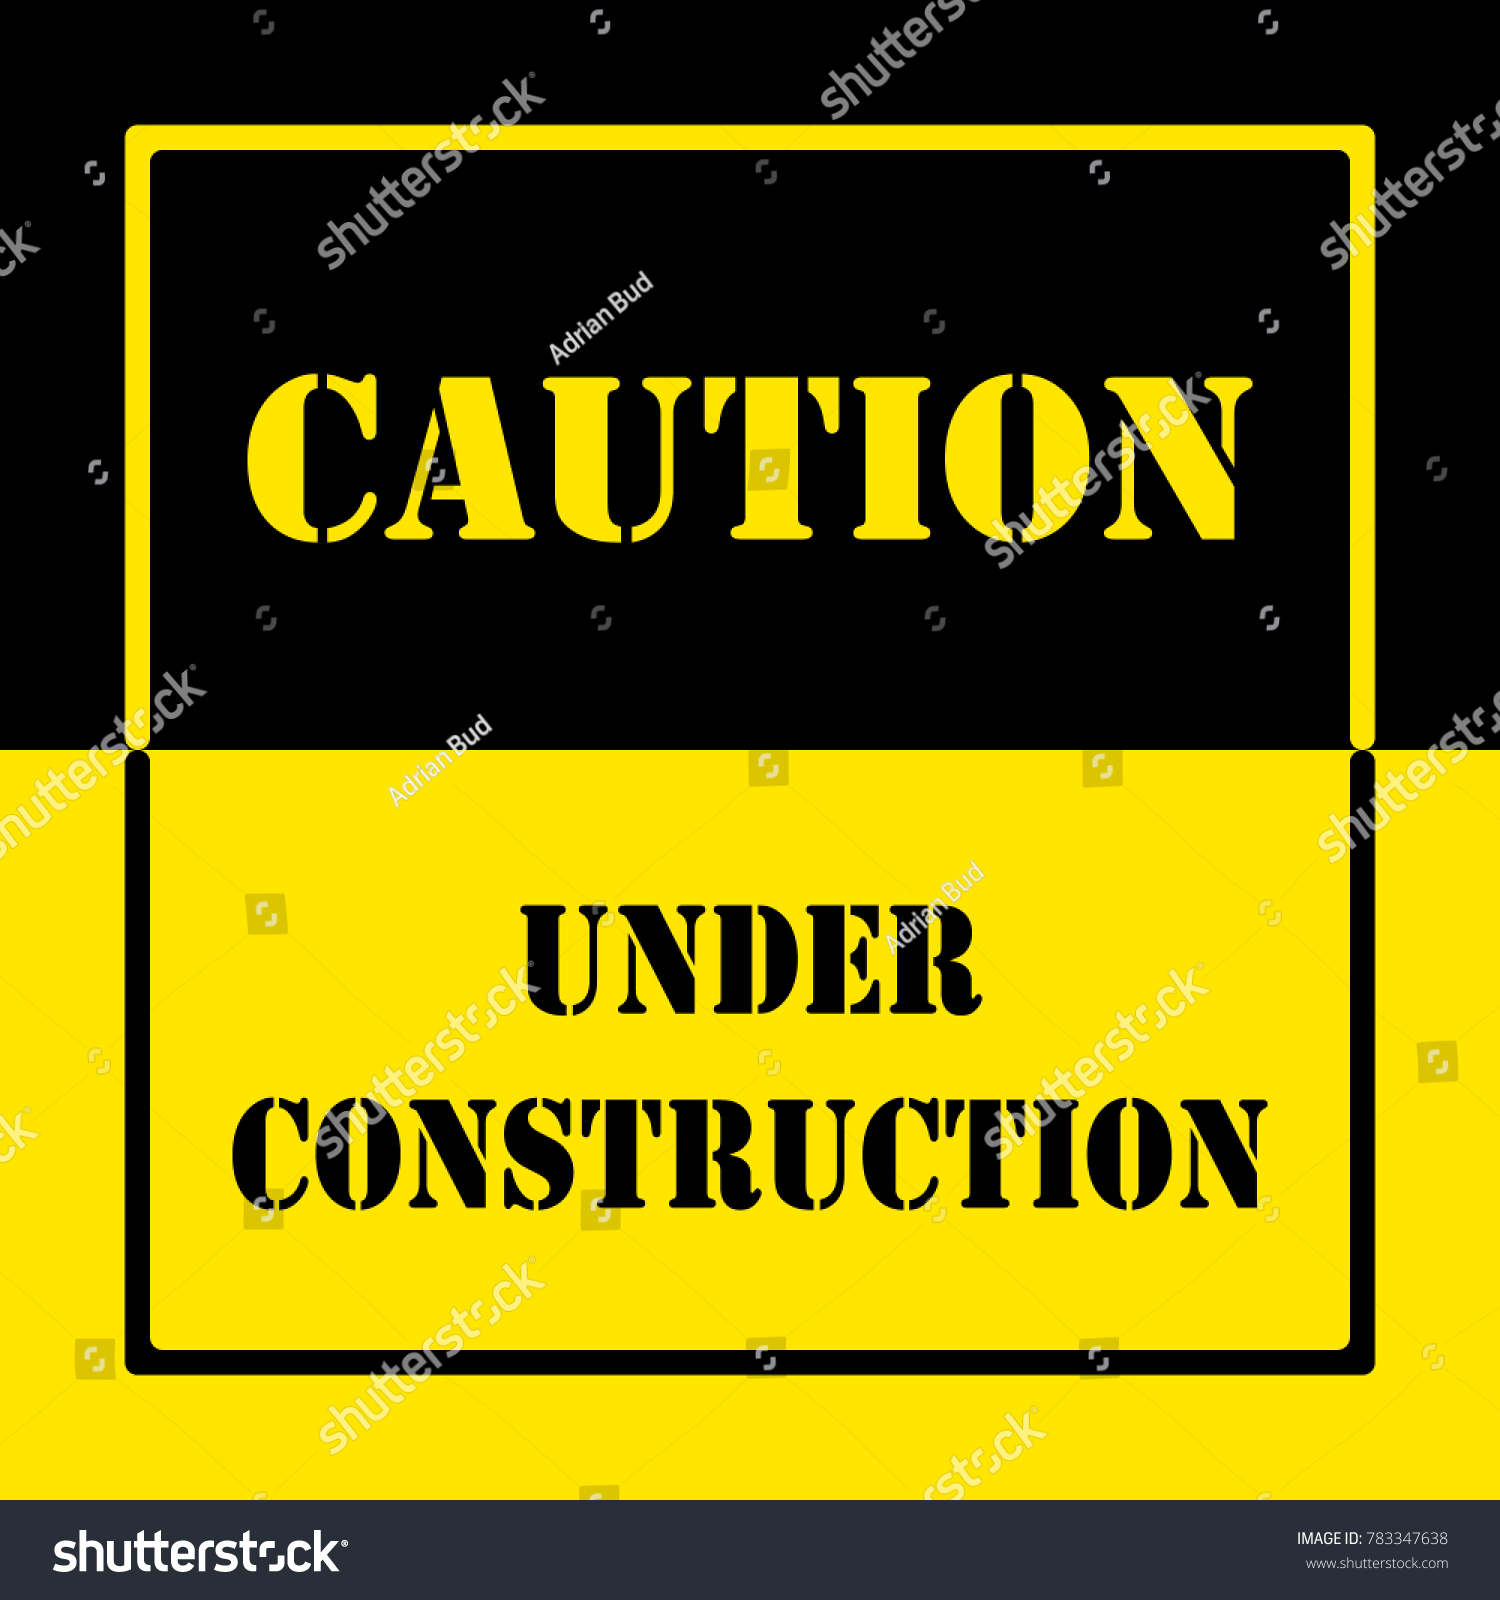 Caution Under Construction Warning Sign Black Stock Vector (Royalty ...